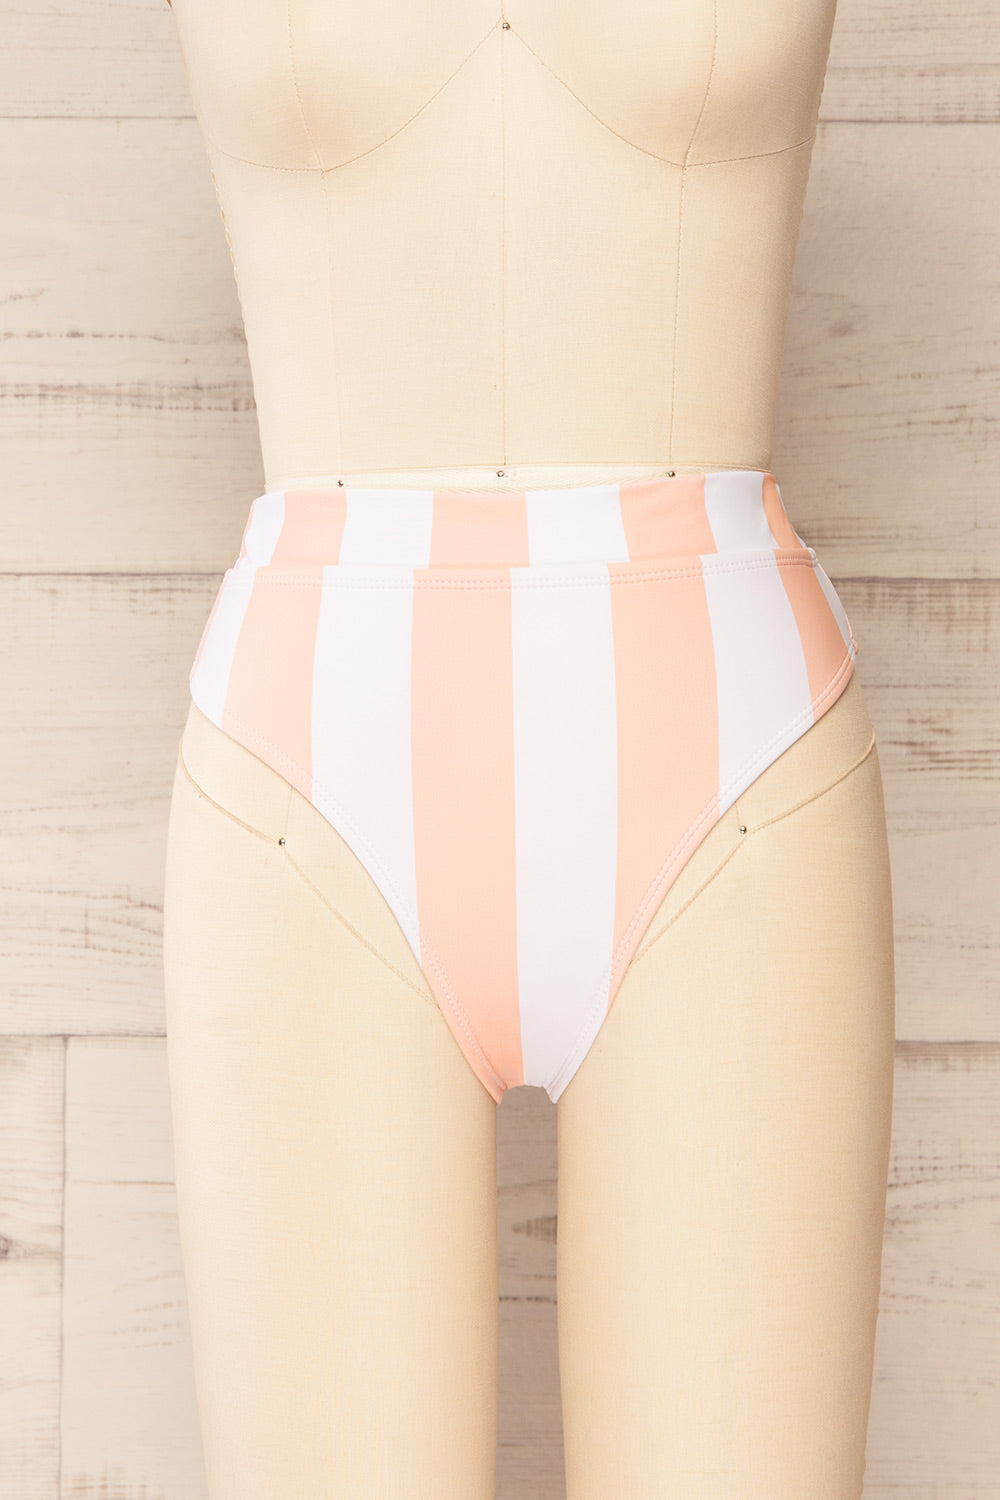 Zuwena Stripes Pink Bikini Bottom | La petite garçonne front view